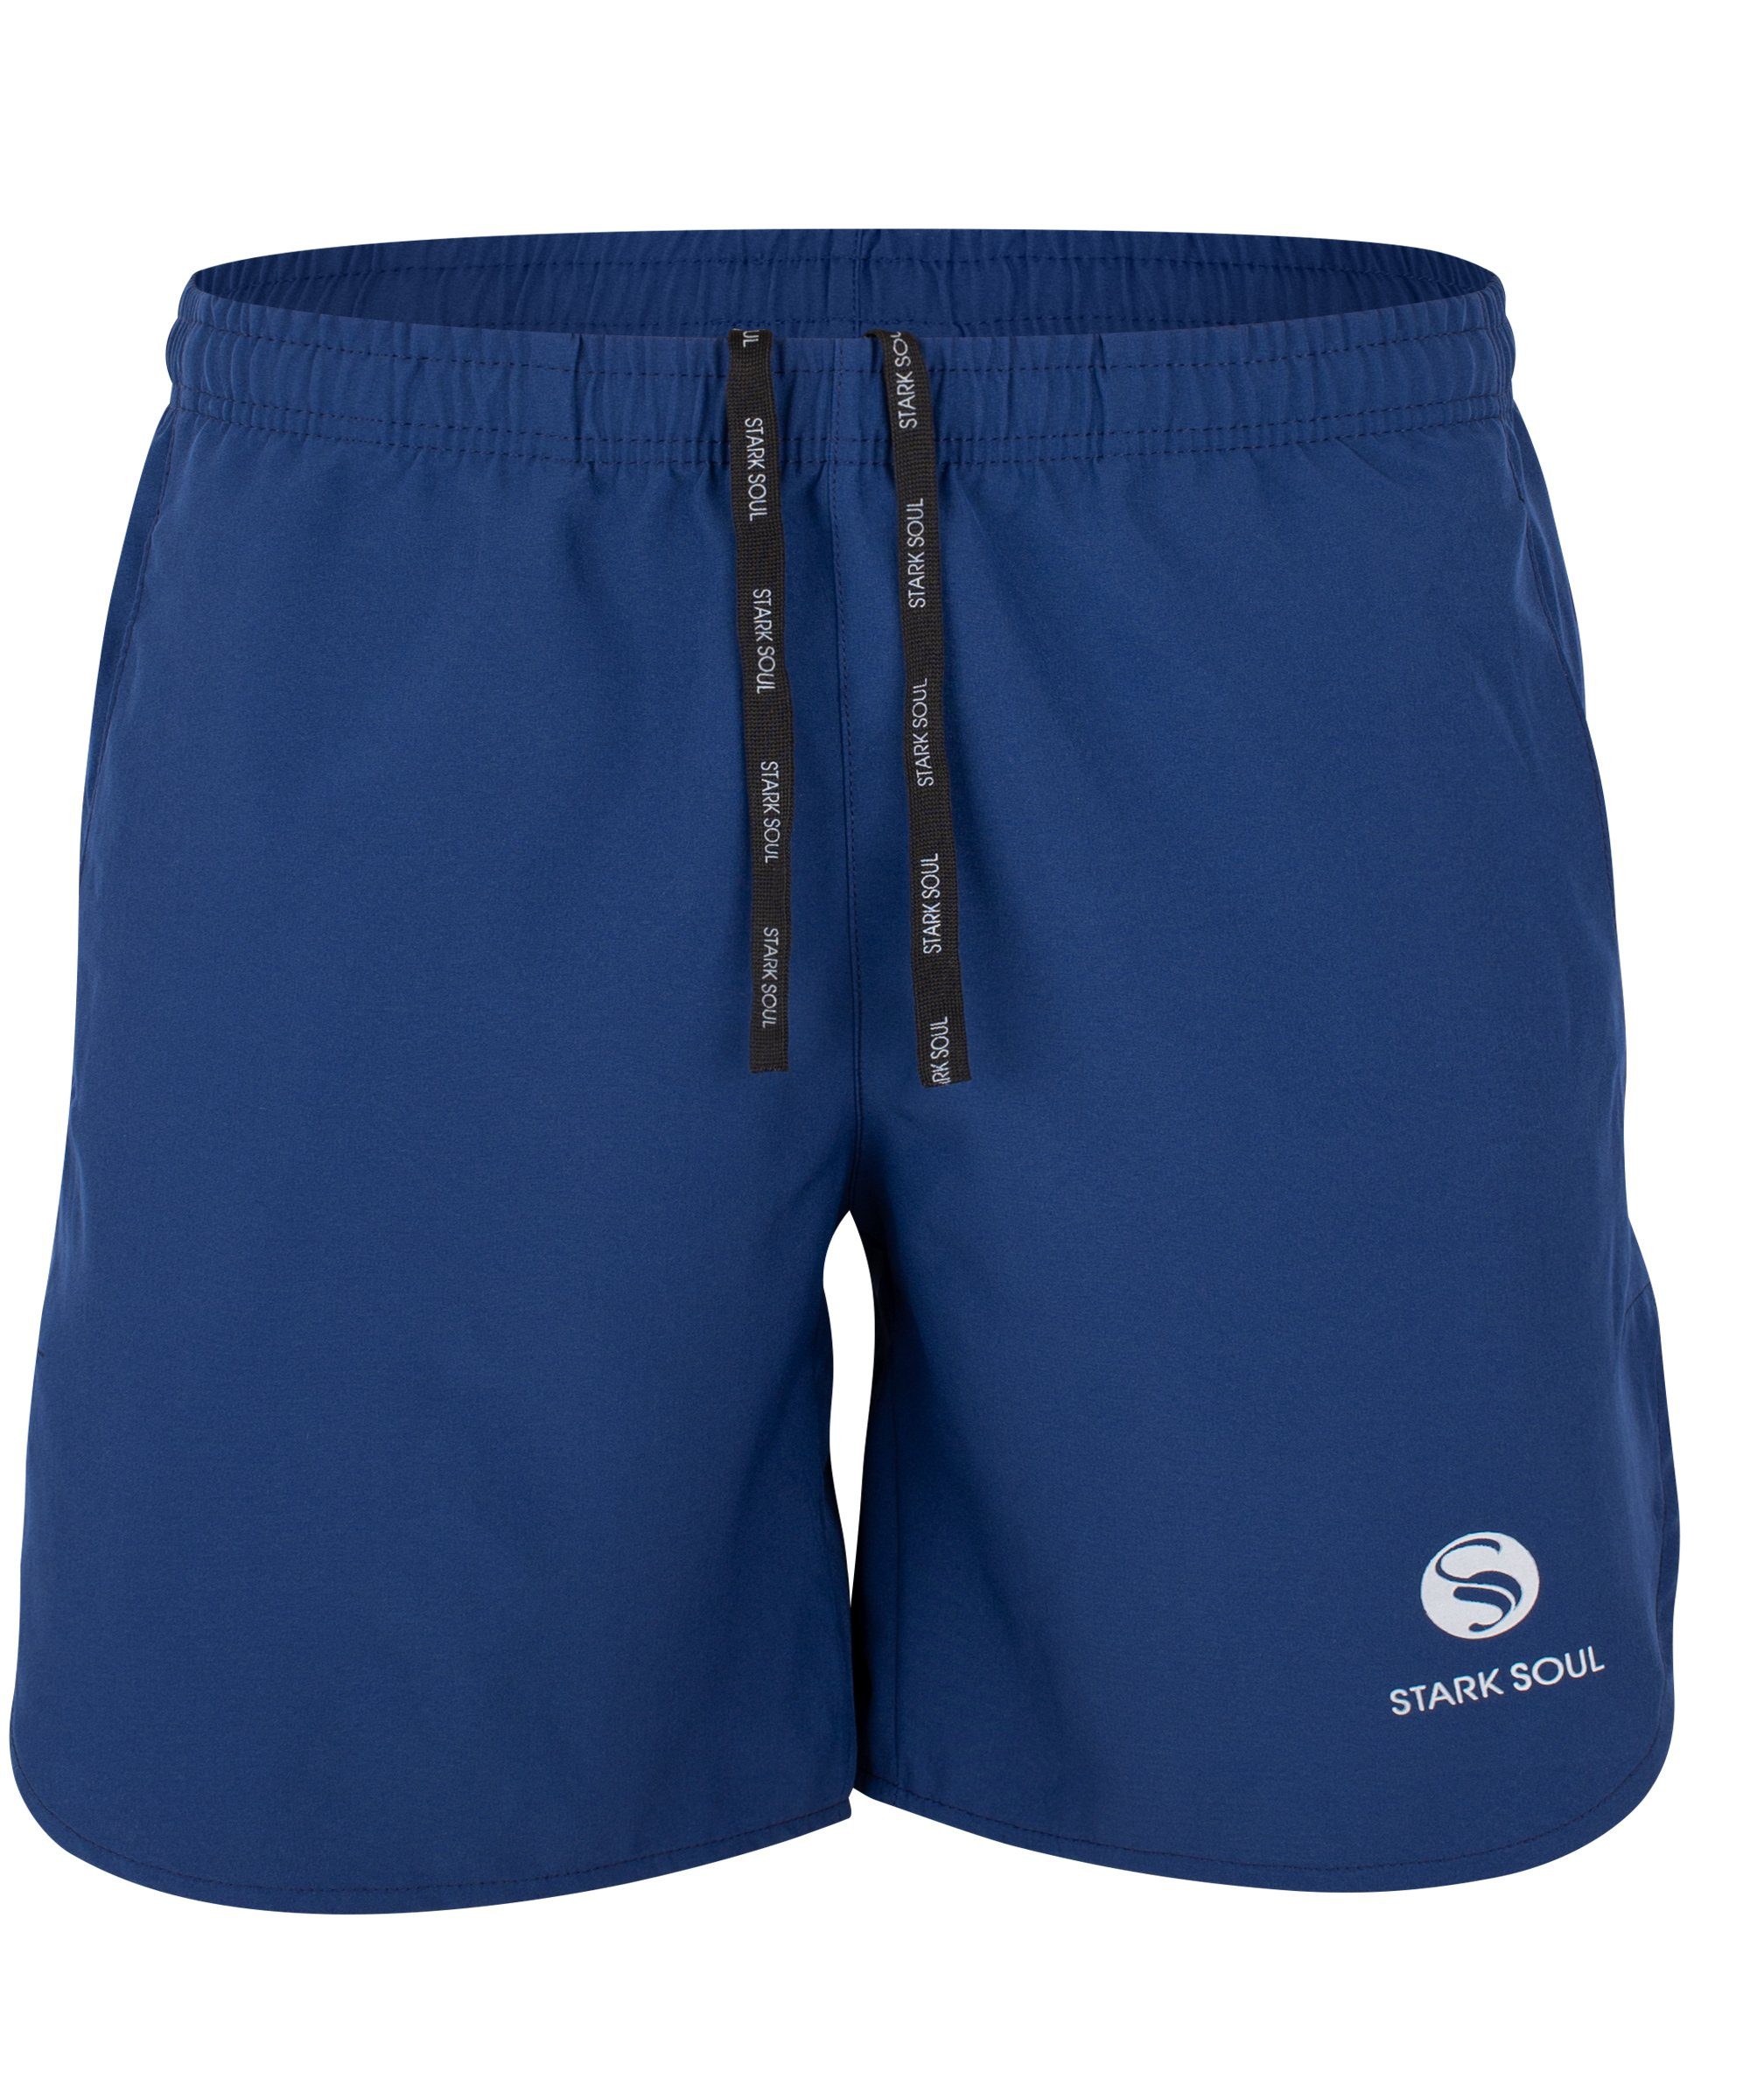 Stark Soul® Trainingsshorts Herren Sport Shorts -Reflect-, Funktionshose, Trainingsshort Spezielles Quick Dry Material Marineblau